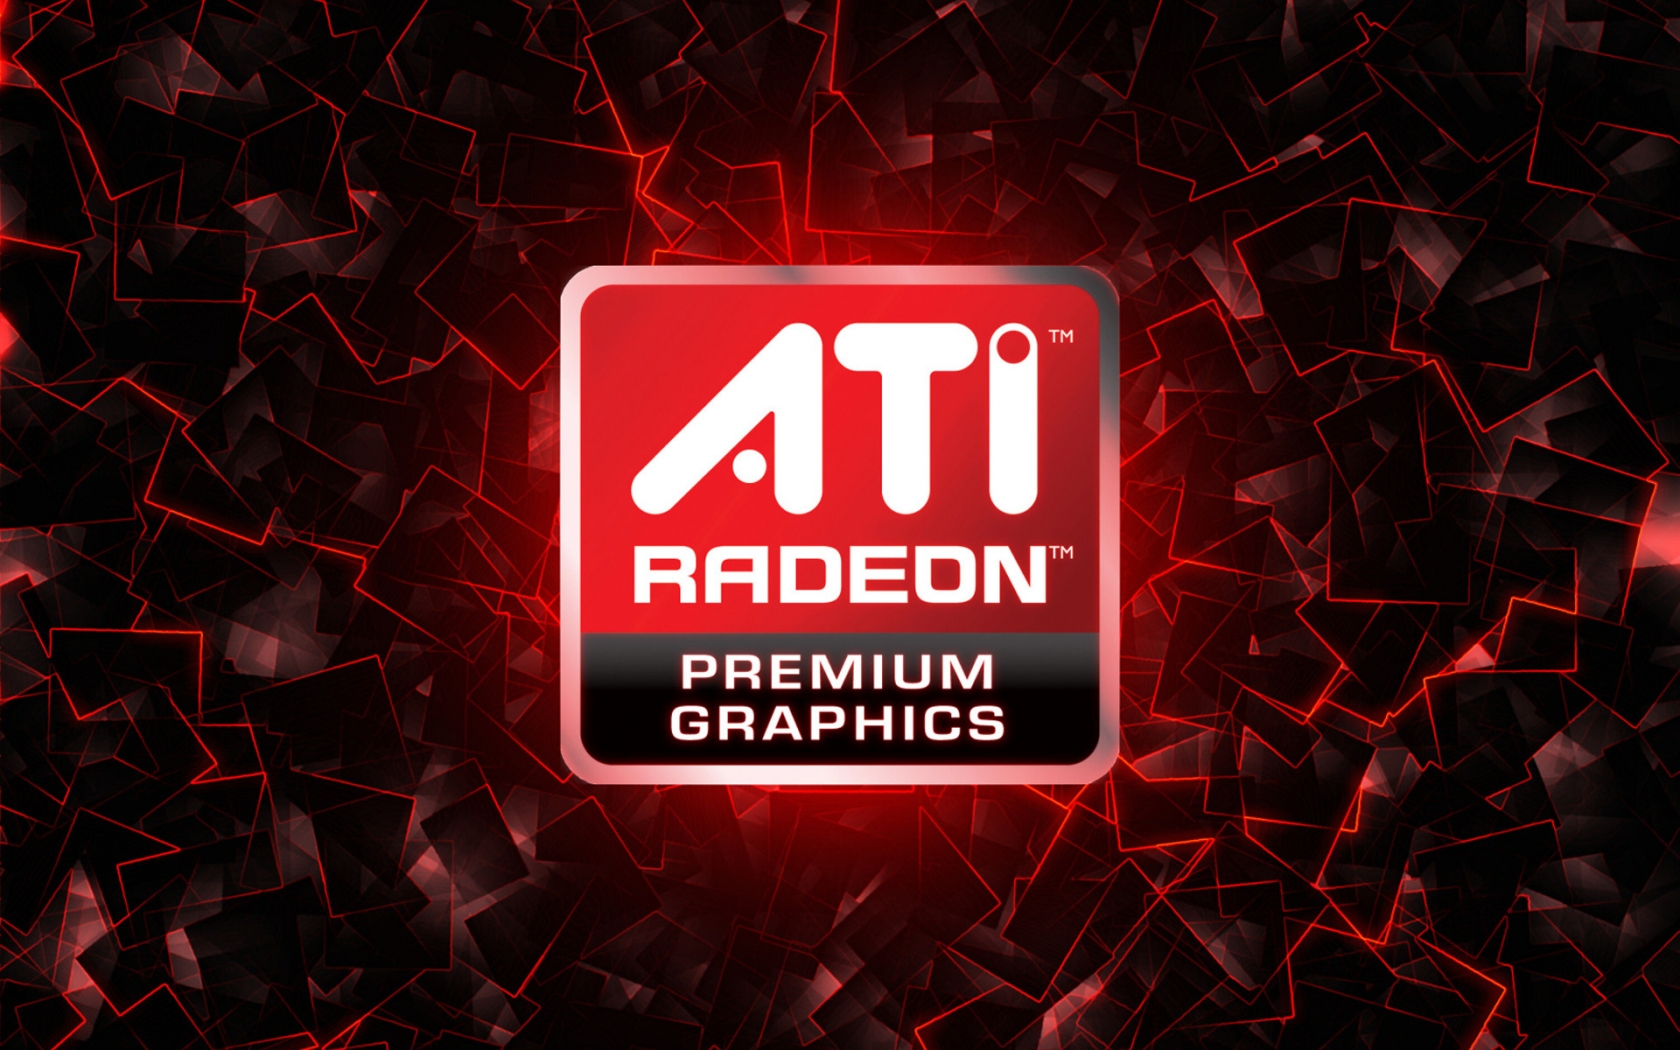 ATI Radeon Premium Graphics for 1680 x 1050 widescreen resolution